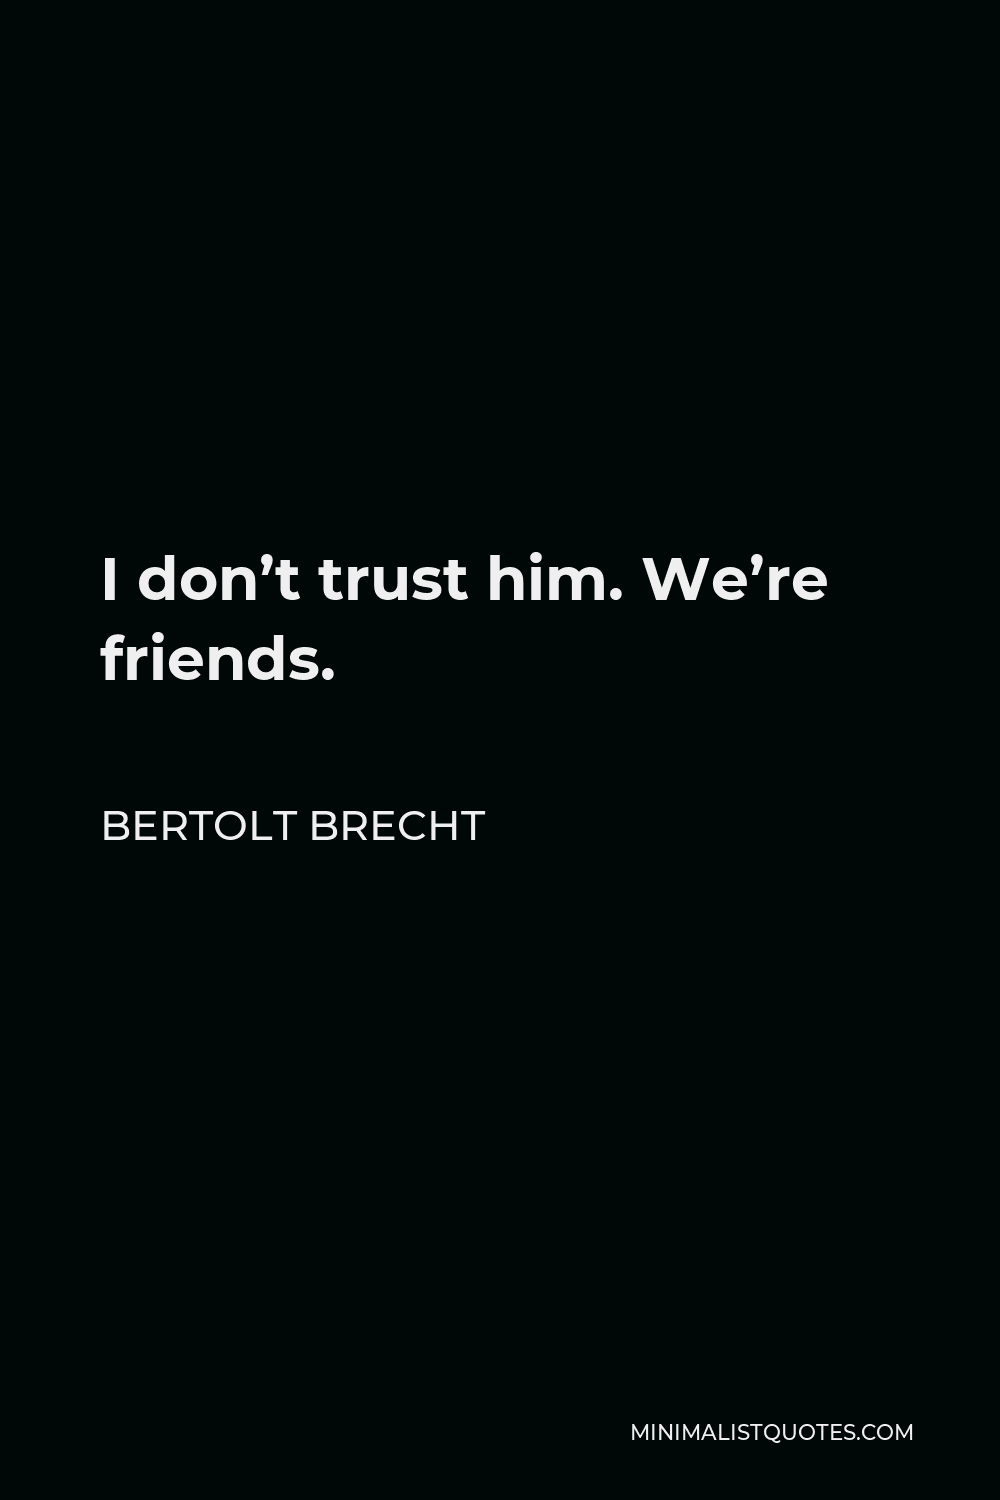 Bertolt Brecht Quote - I don’t trust him. We’re friends.